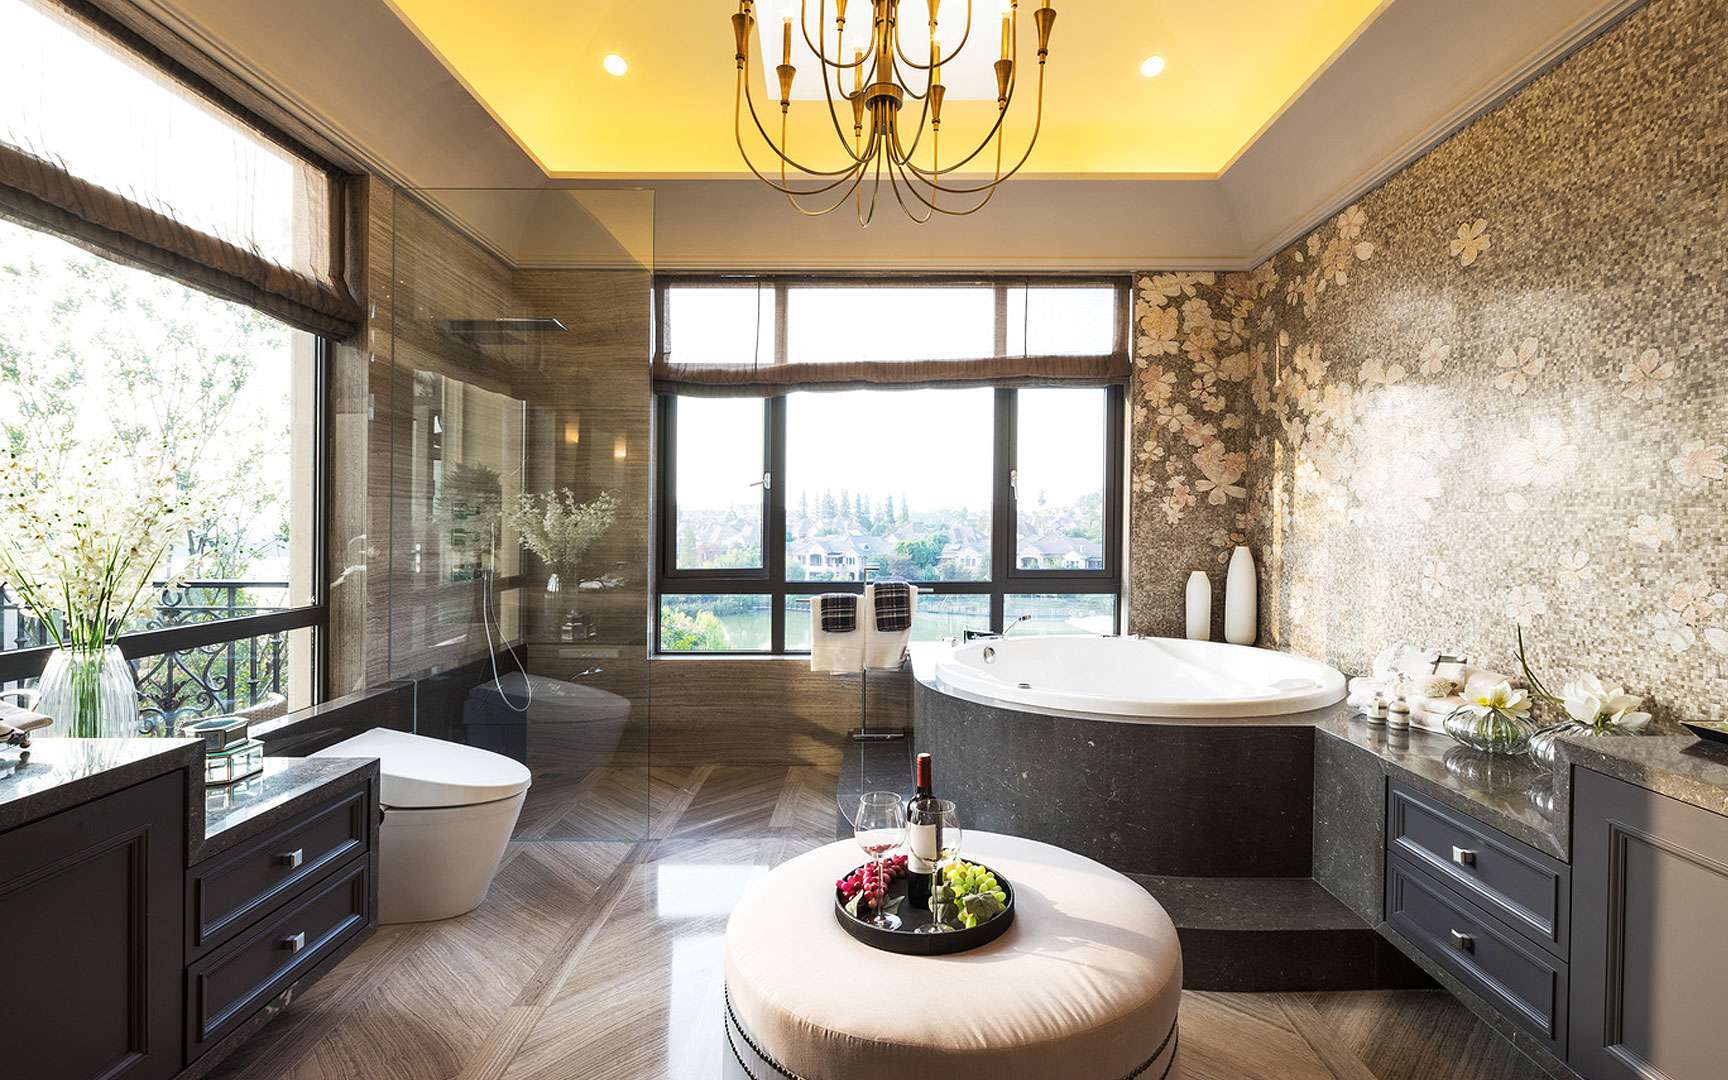 Salle de bain contemporaine. © Zhu Difeng, Fotolia